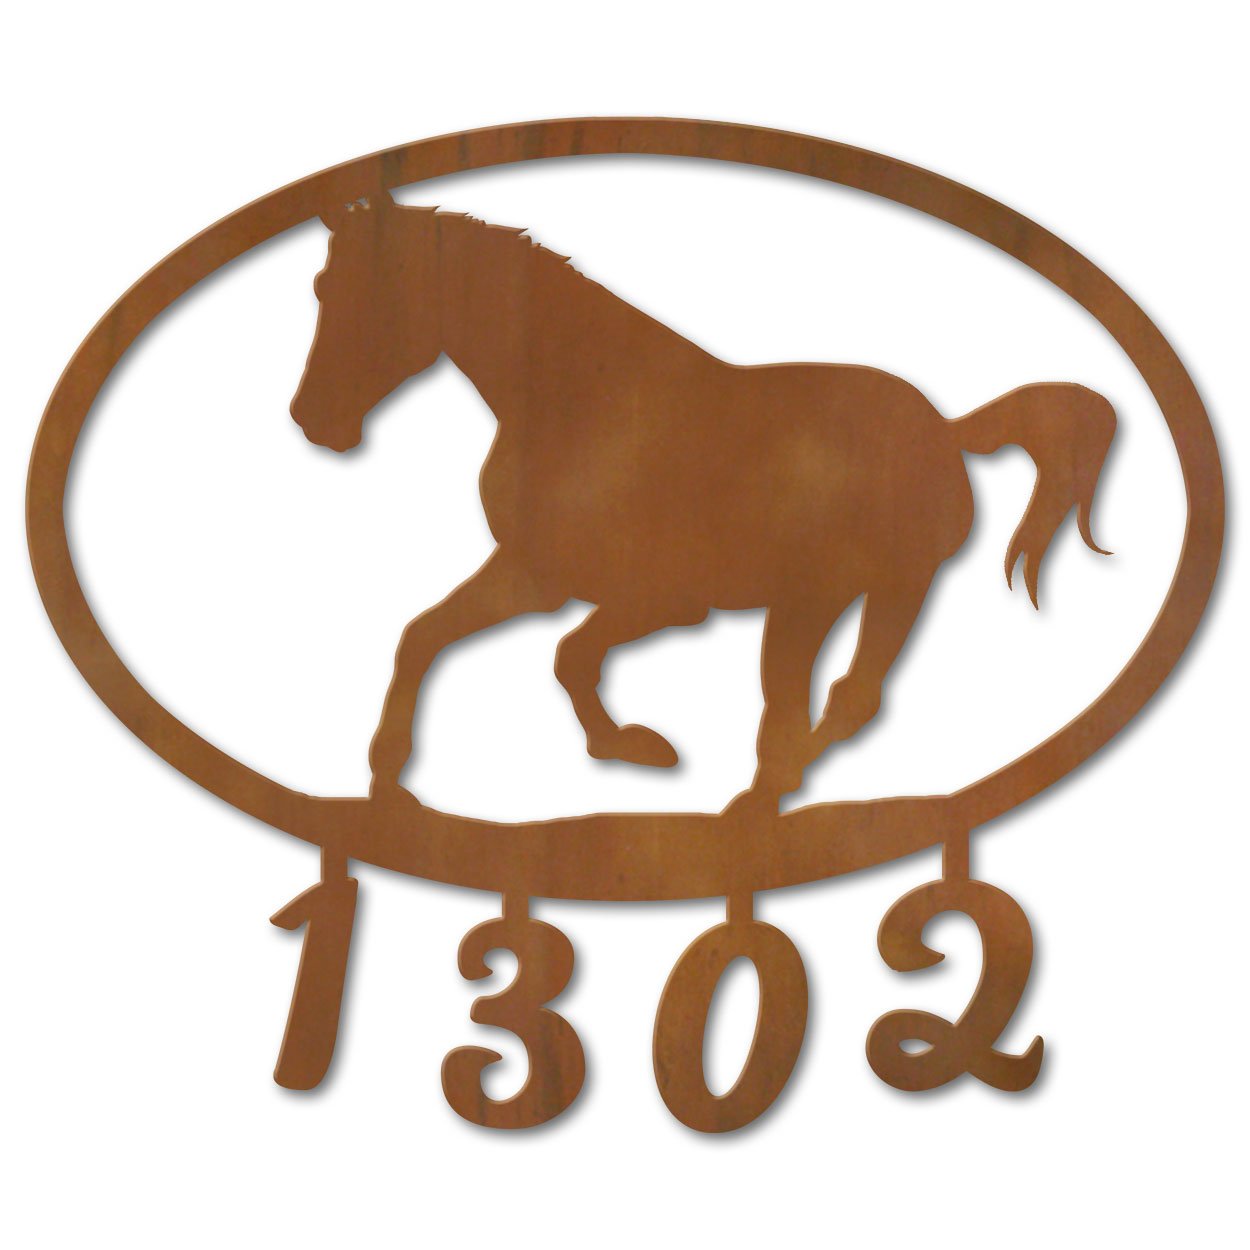 600412 - Running Horse Custom House Numbers